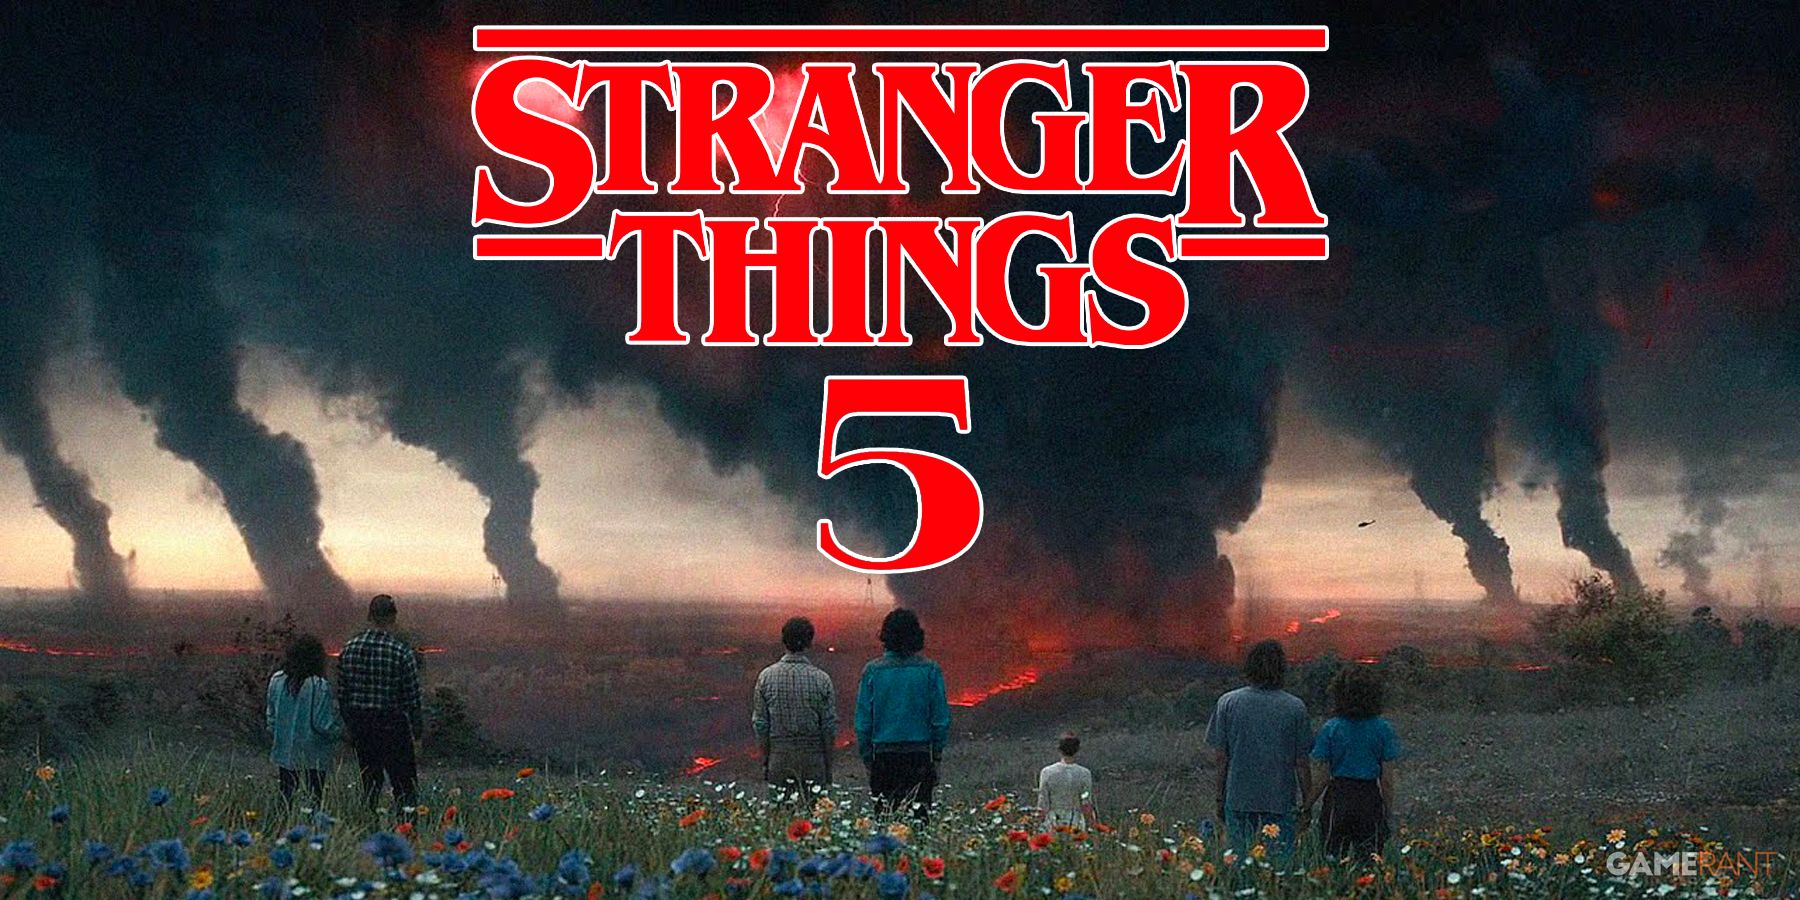 Stranger Things' writers reveal opening scene of Season 5